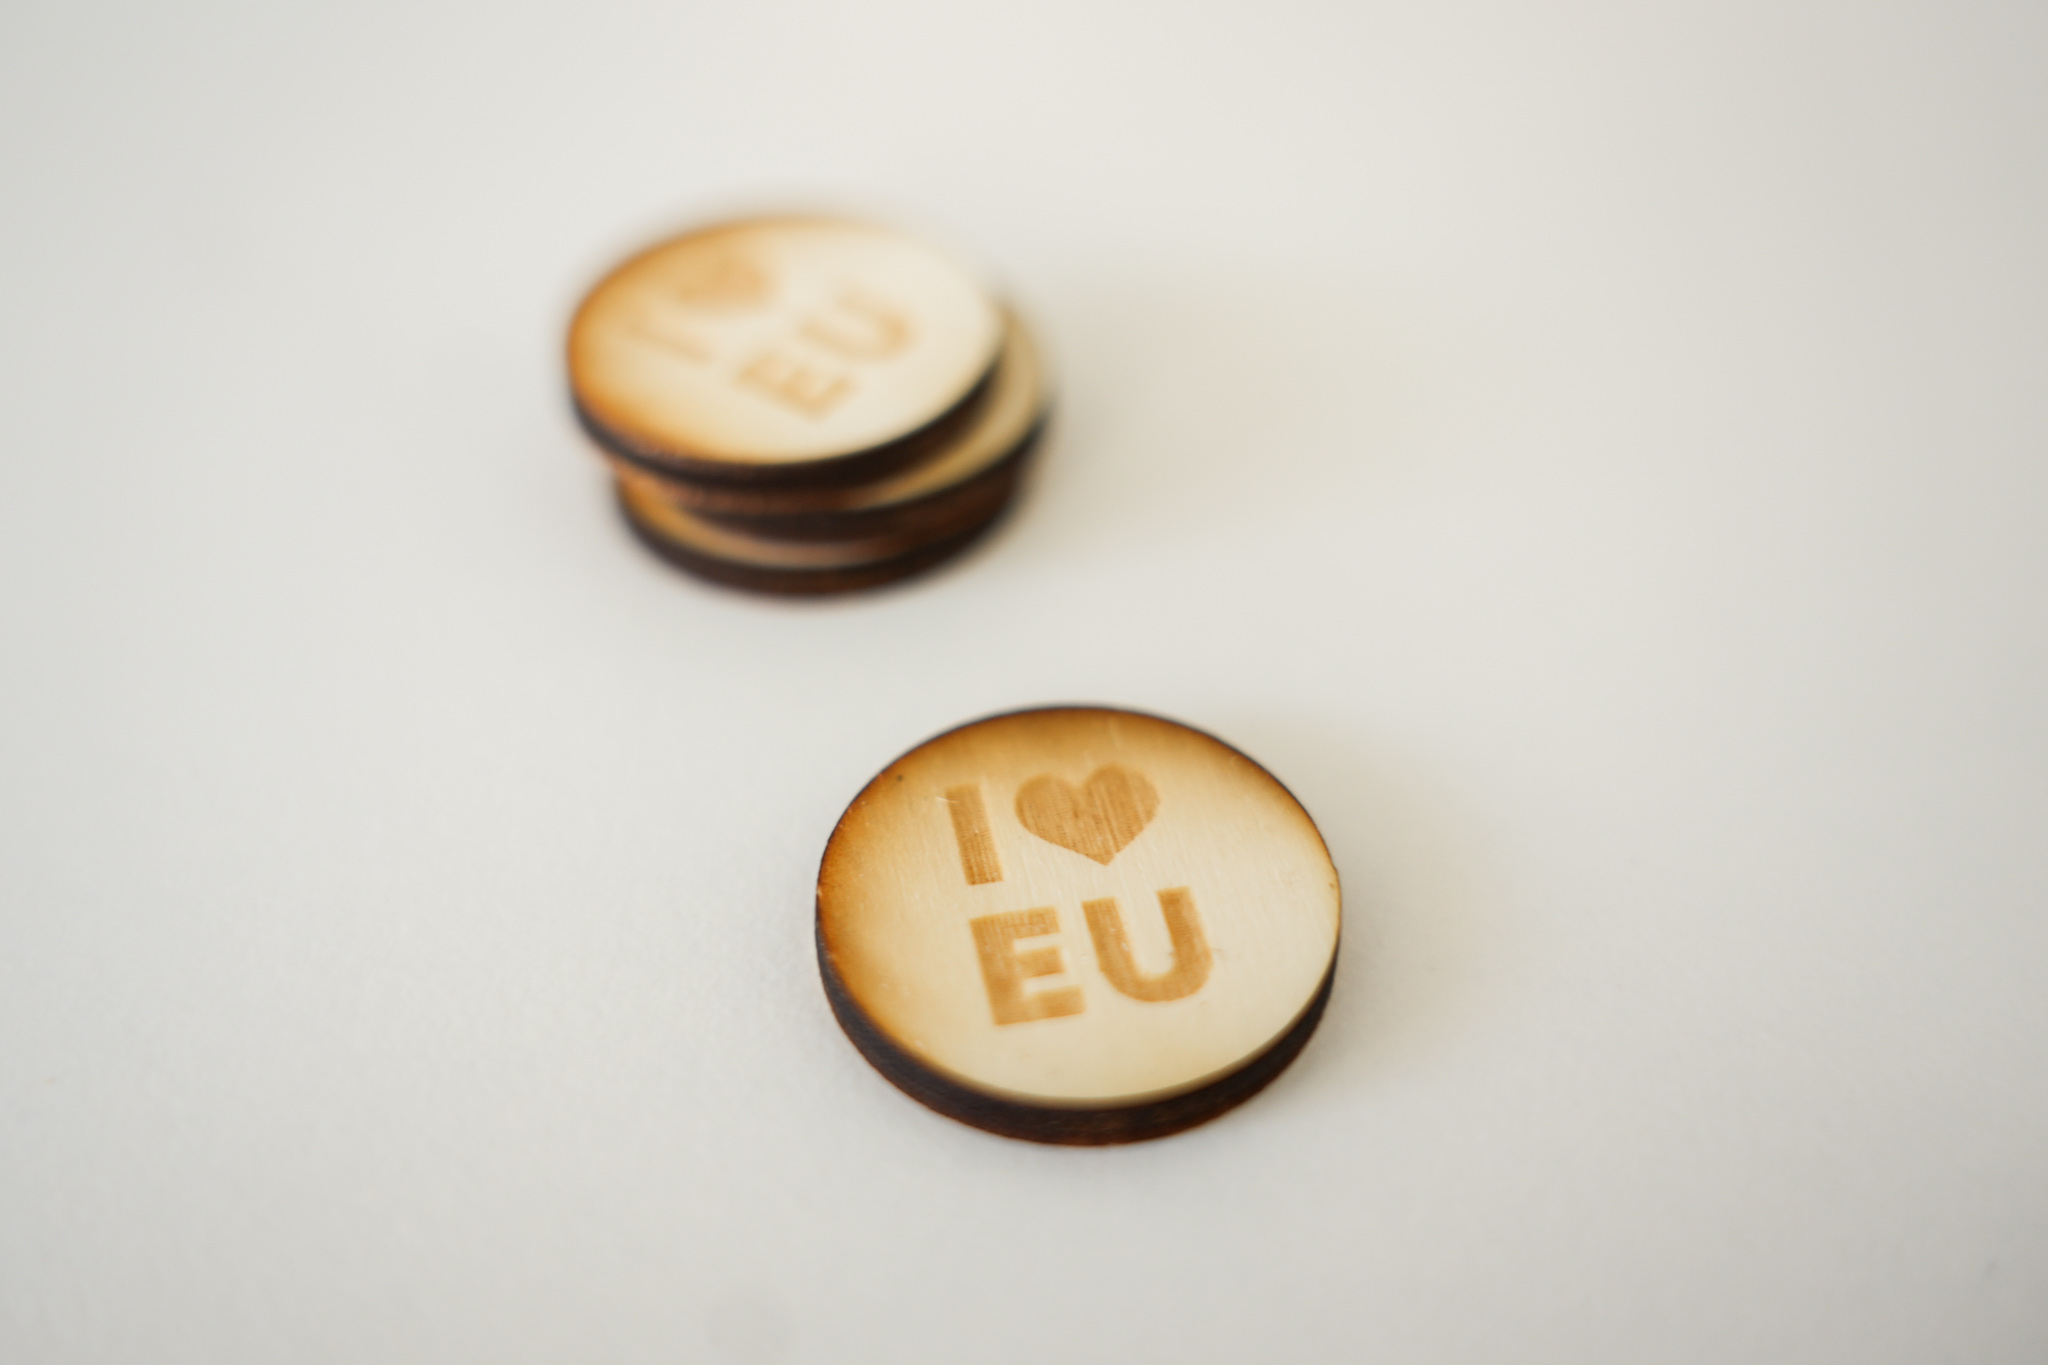 EU Einkaufswagenchips aus Holz  - I love EU